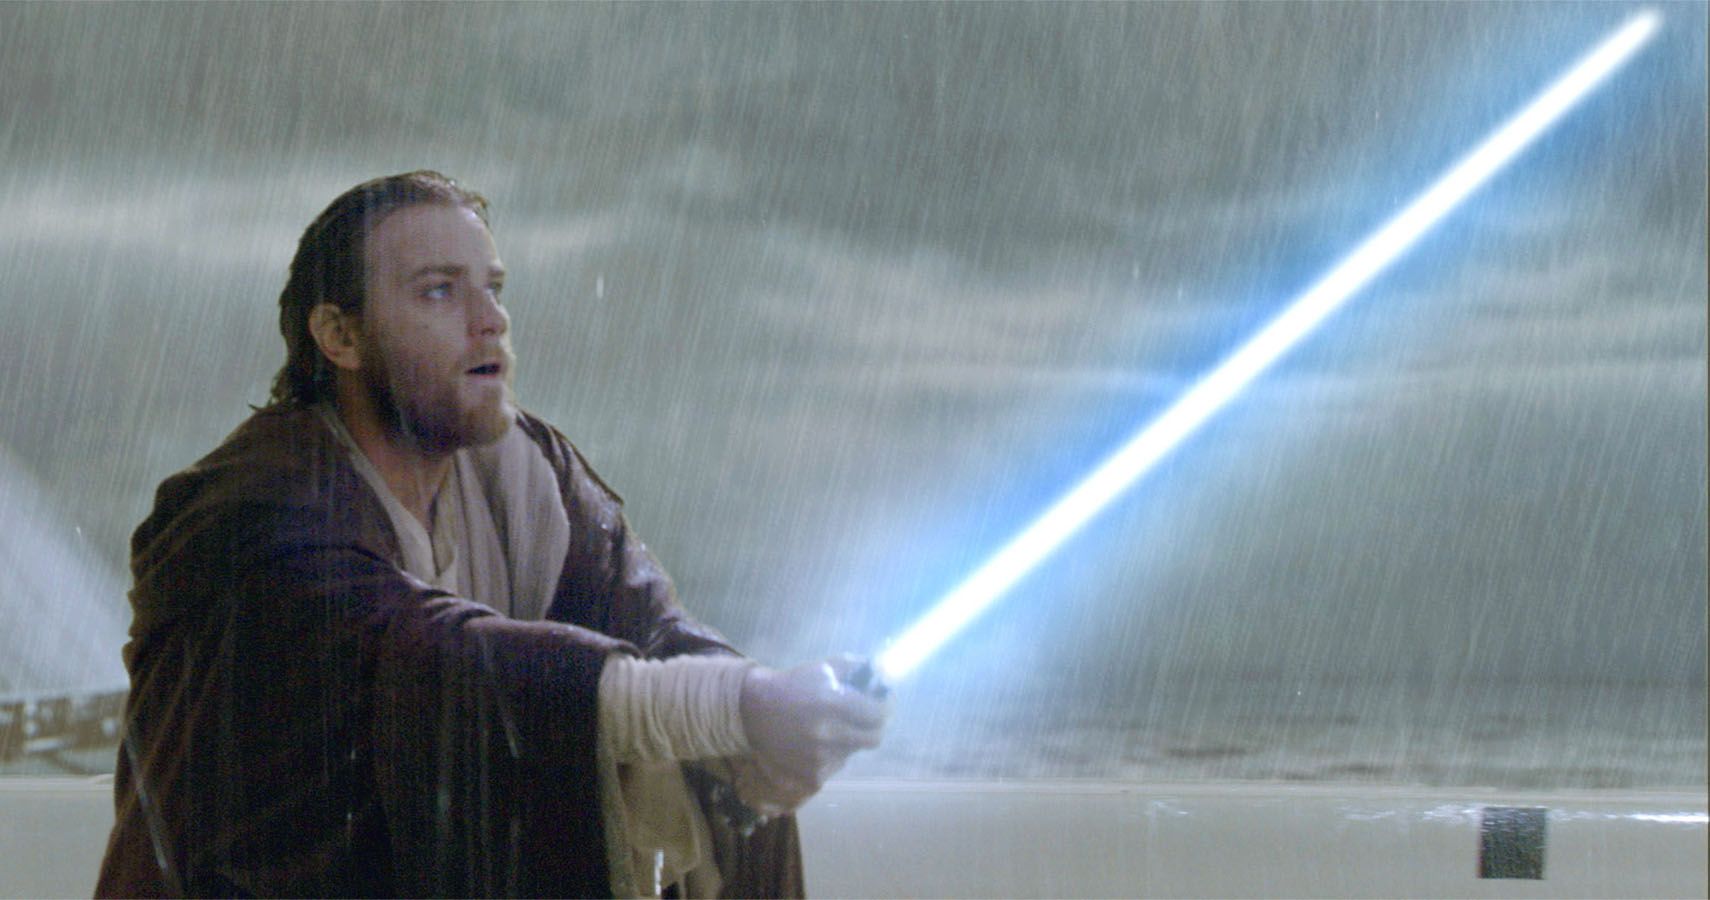 Ewan McGregor as Obi-Wan Kenobi in Episode II Attack of the Clones